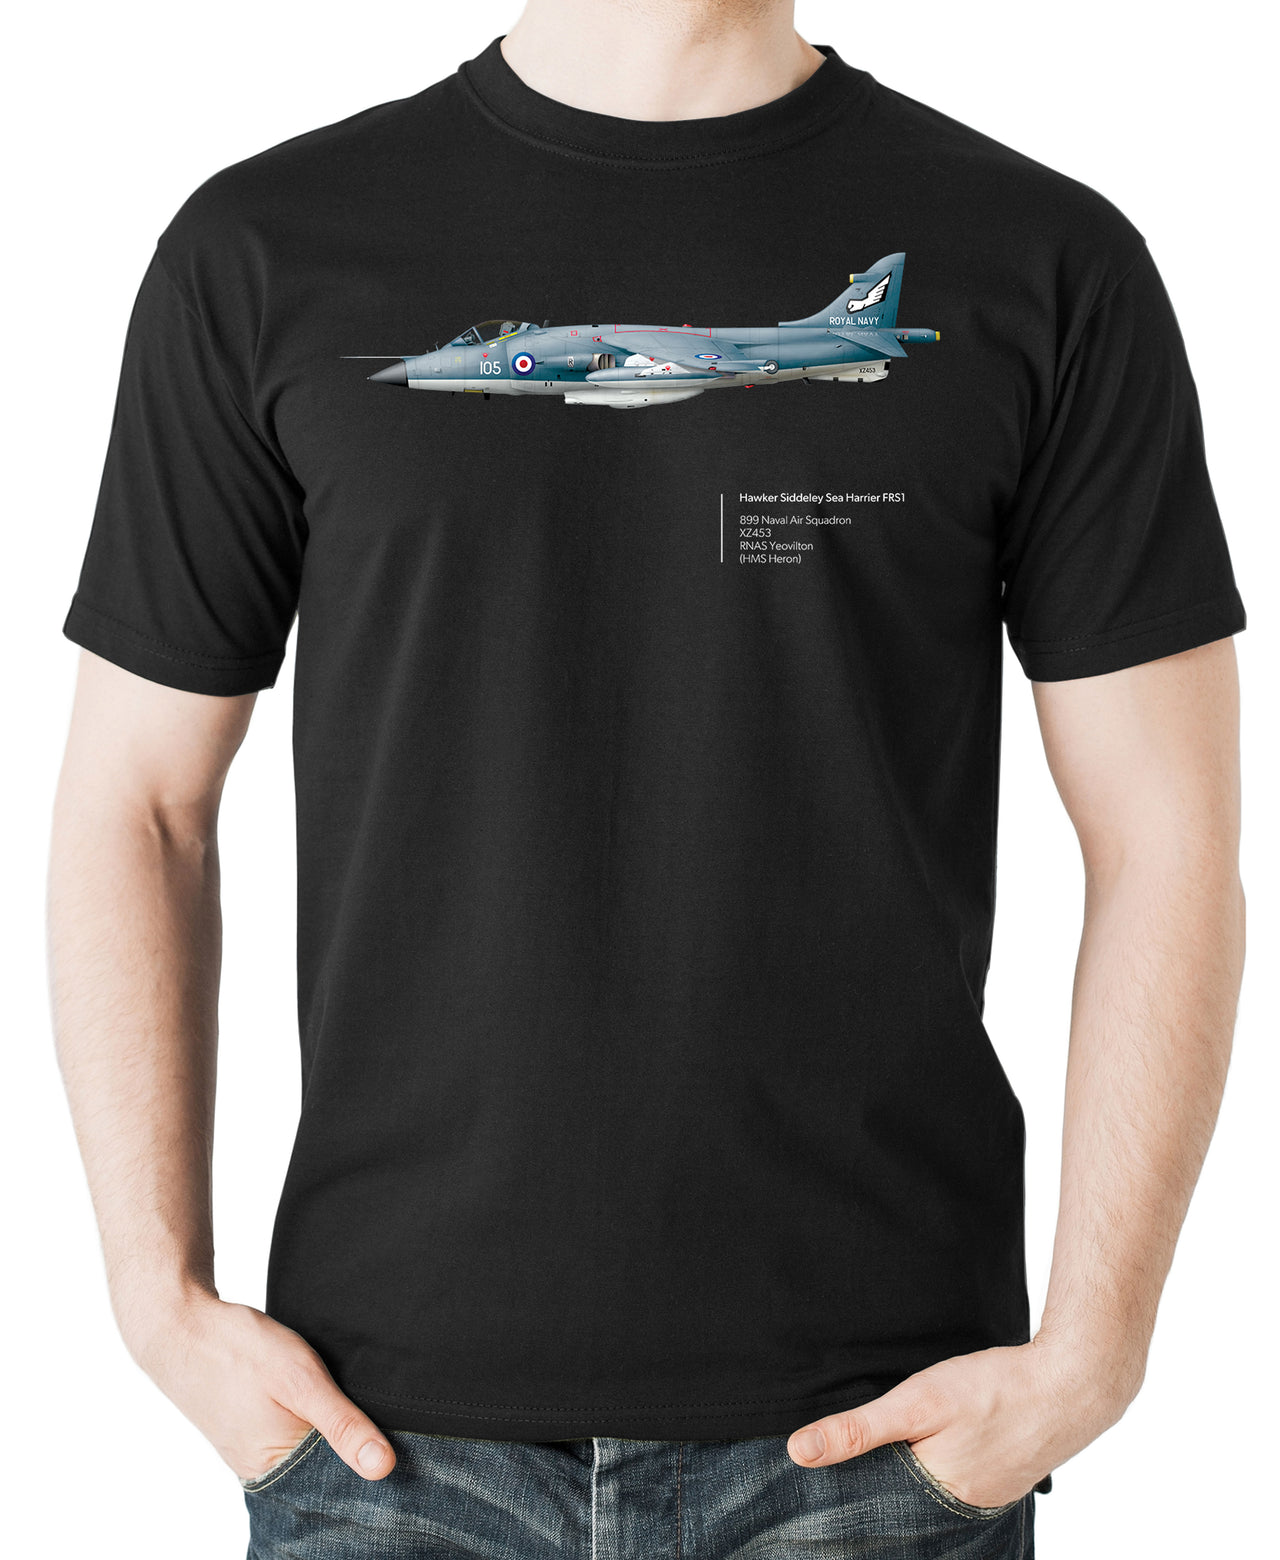 Sea Harrier 899 NAS - T-shirt